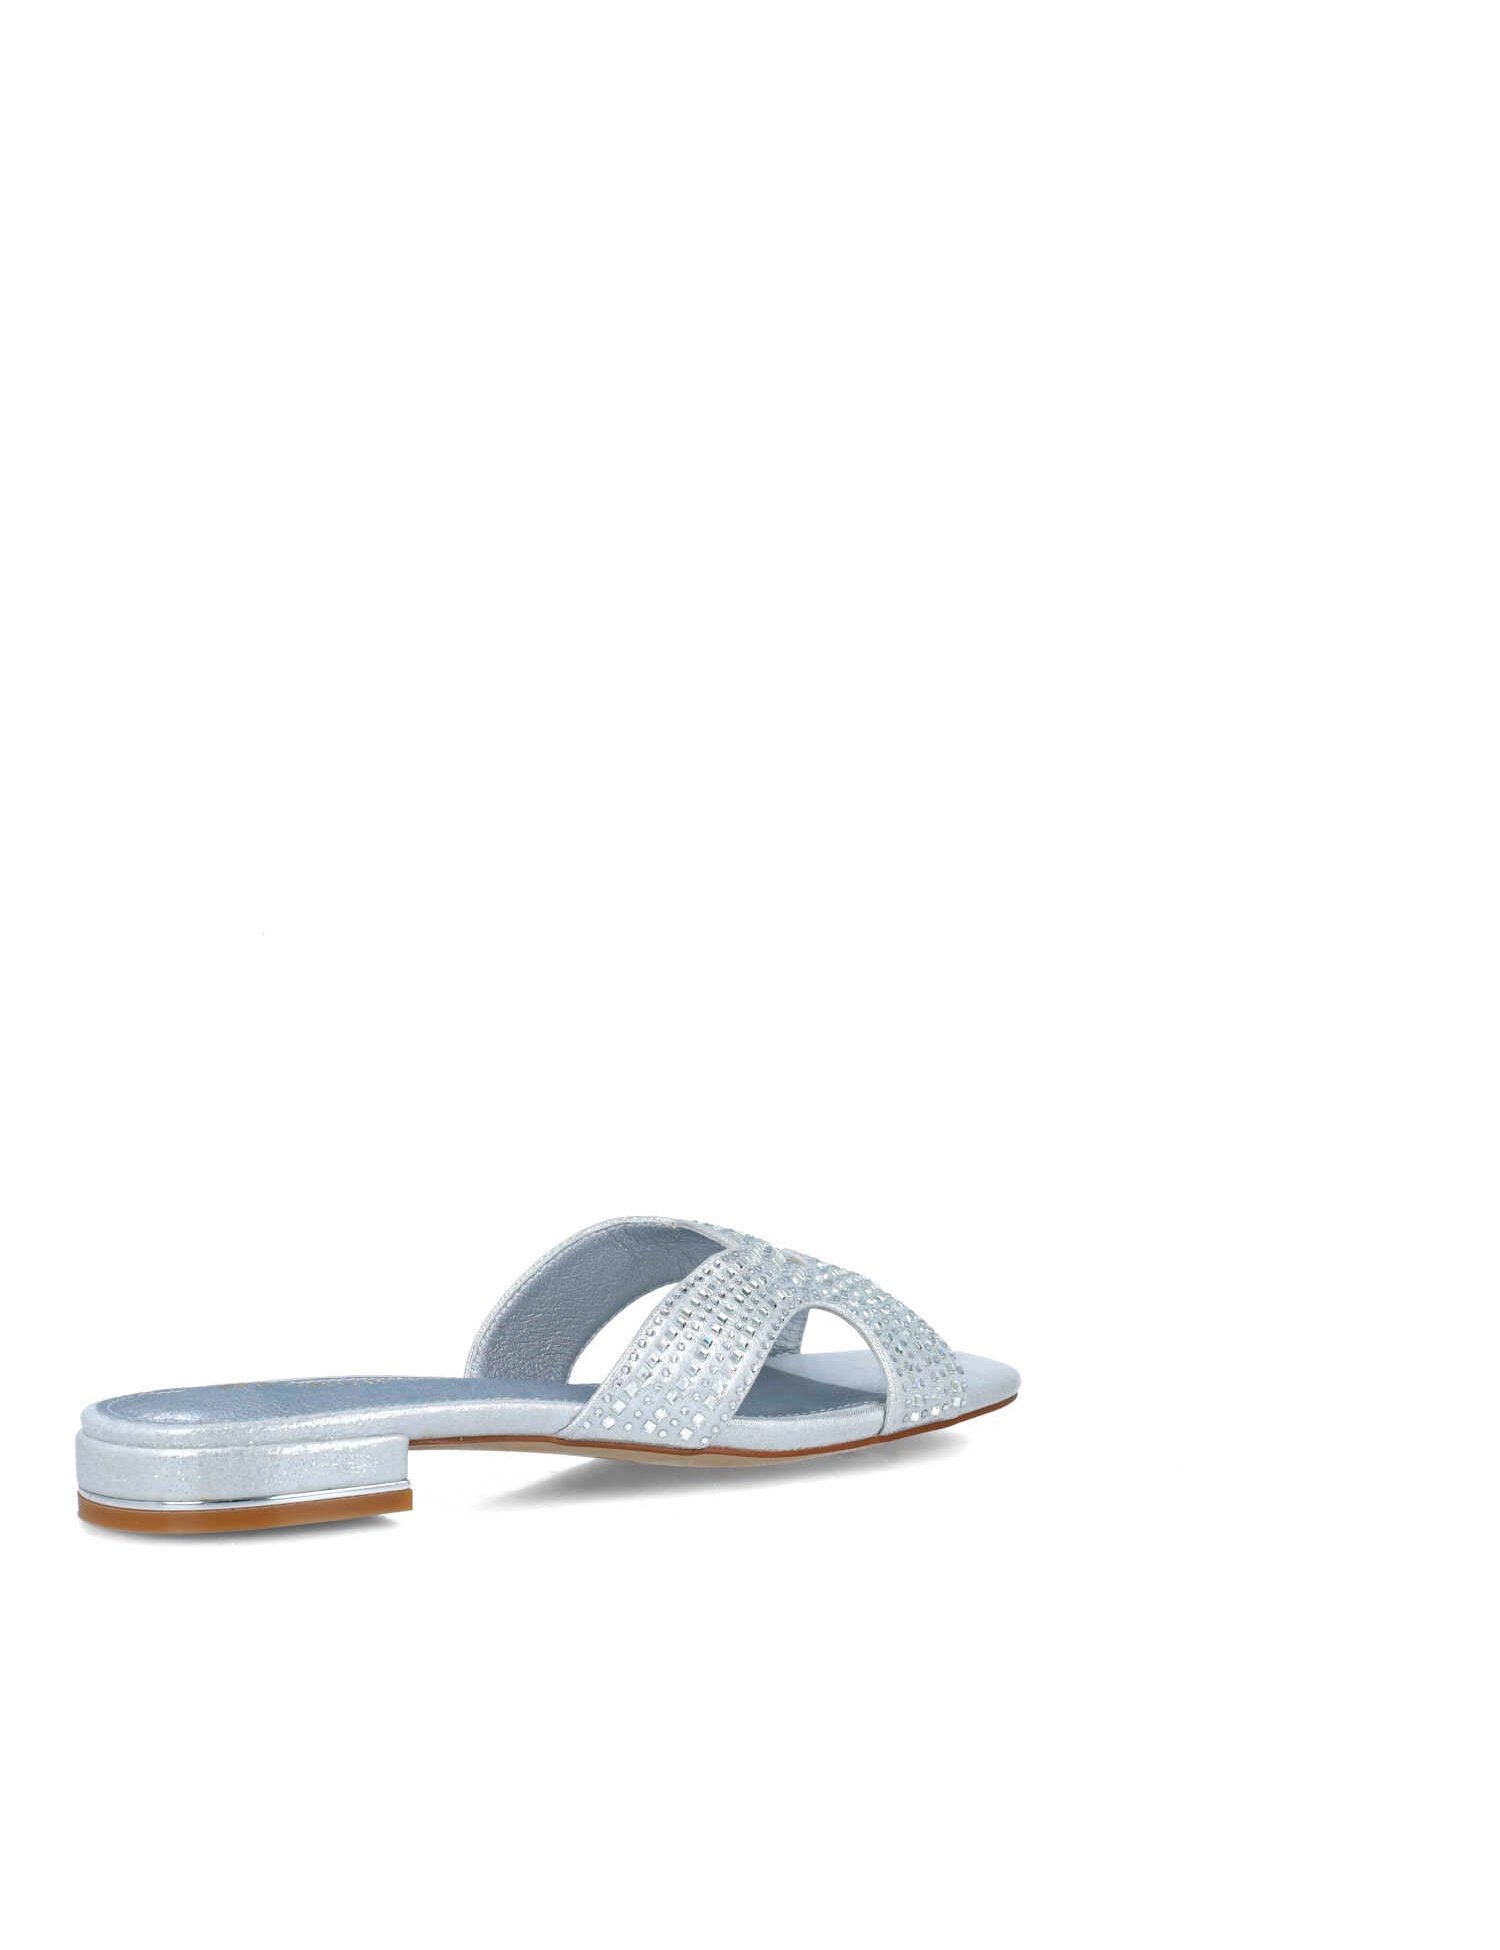 Silver Slippers With Kitten Heel_24739_09_03